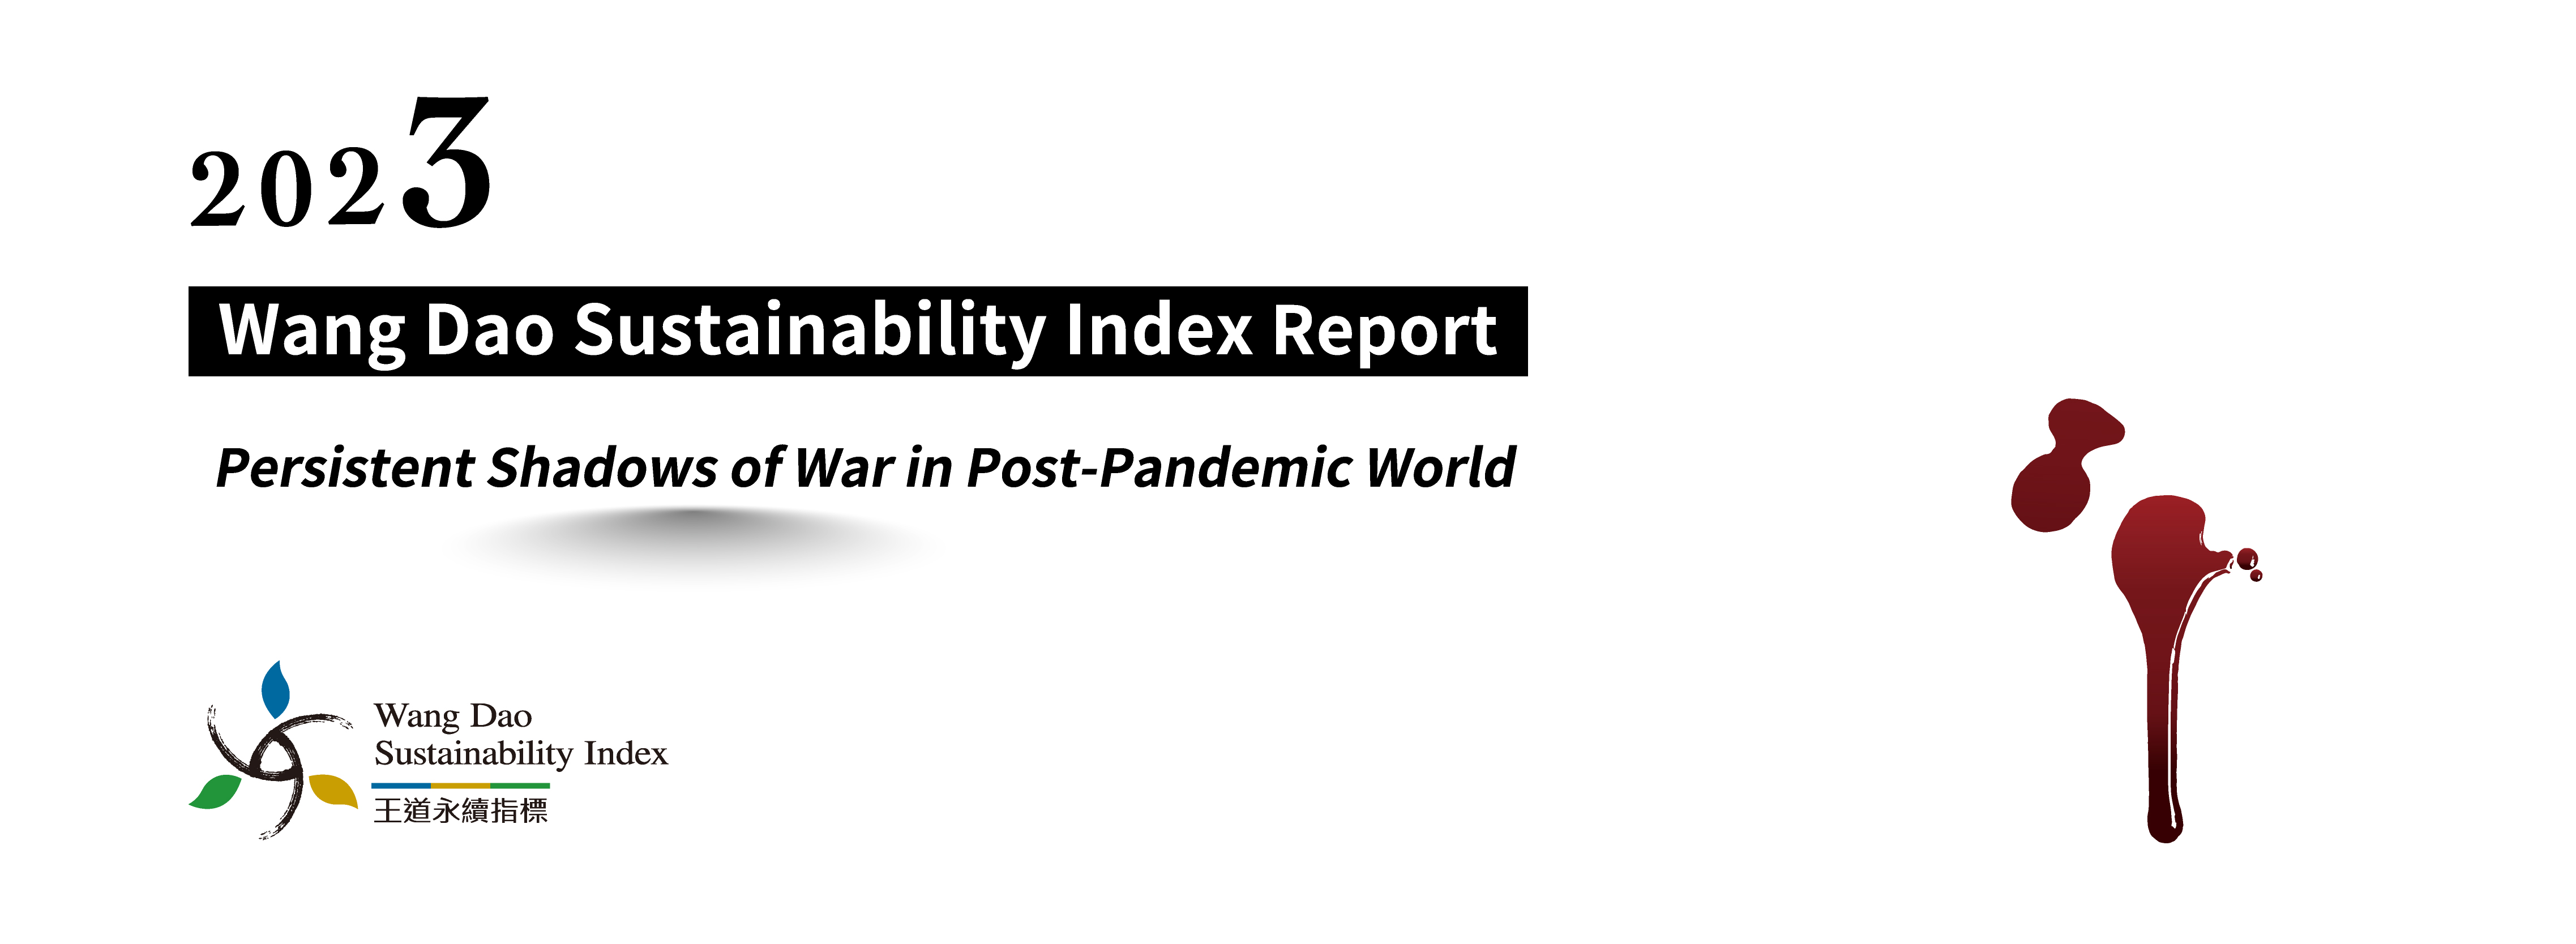 2023 Wang Dao Sustainability Index, WDSI Launch